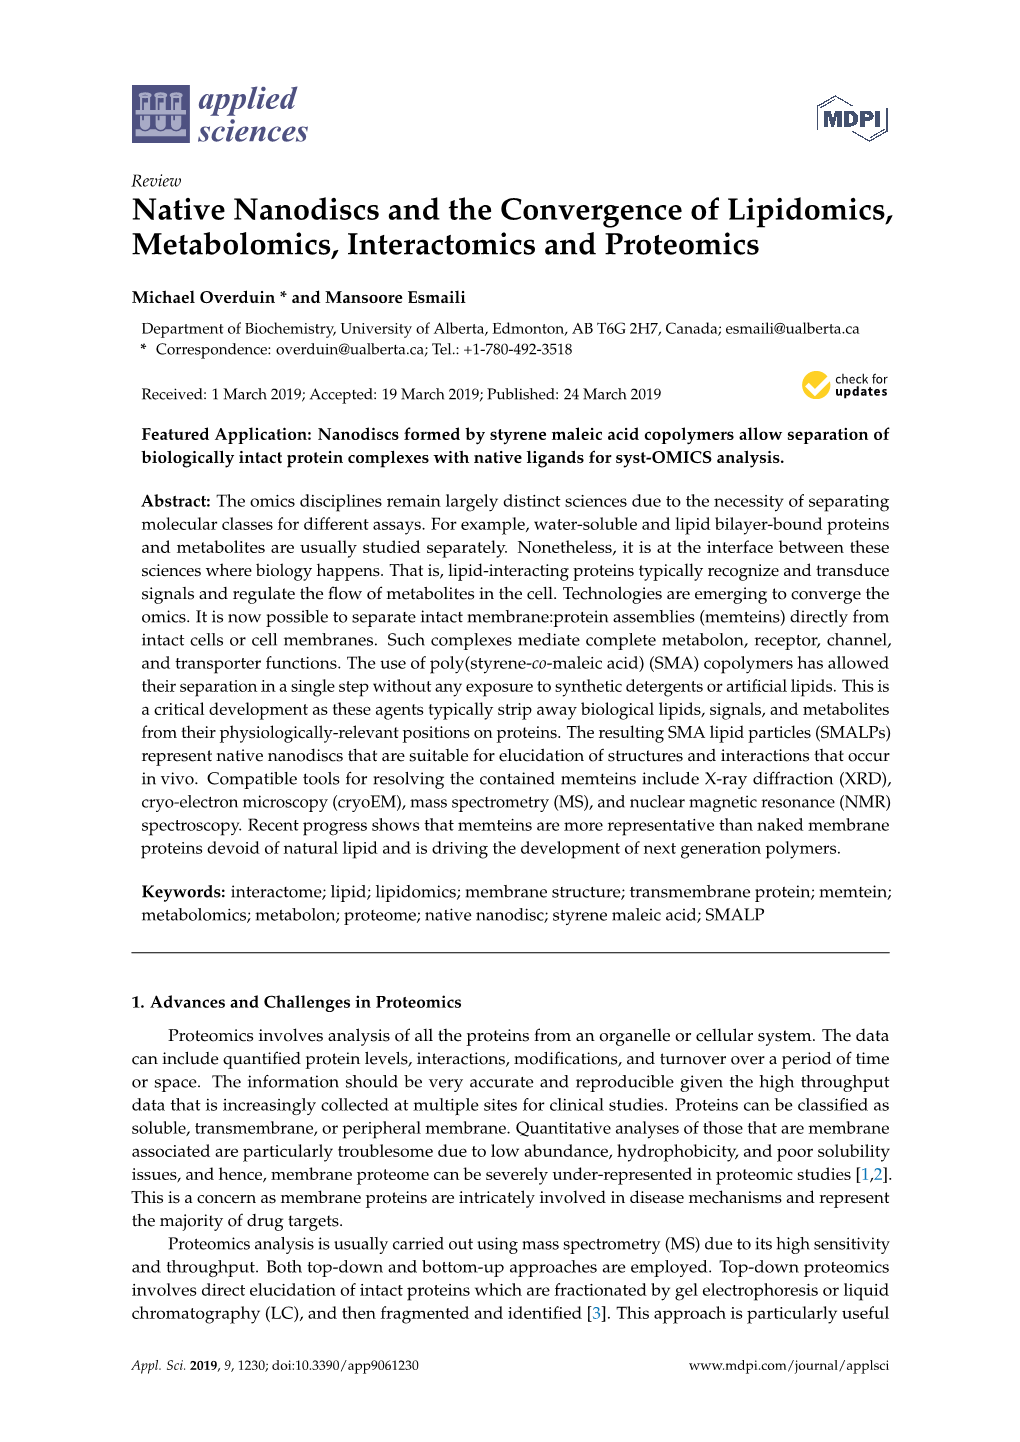 Native Nanodiscs and the Convergence of Lipidomics, Metabolomics, Interactomics and Proteomics